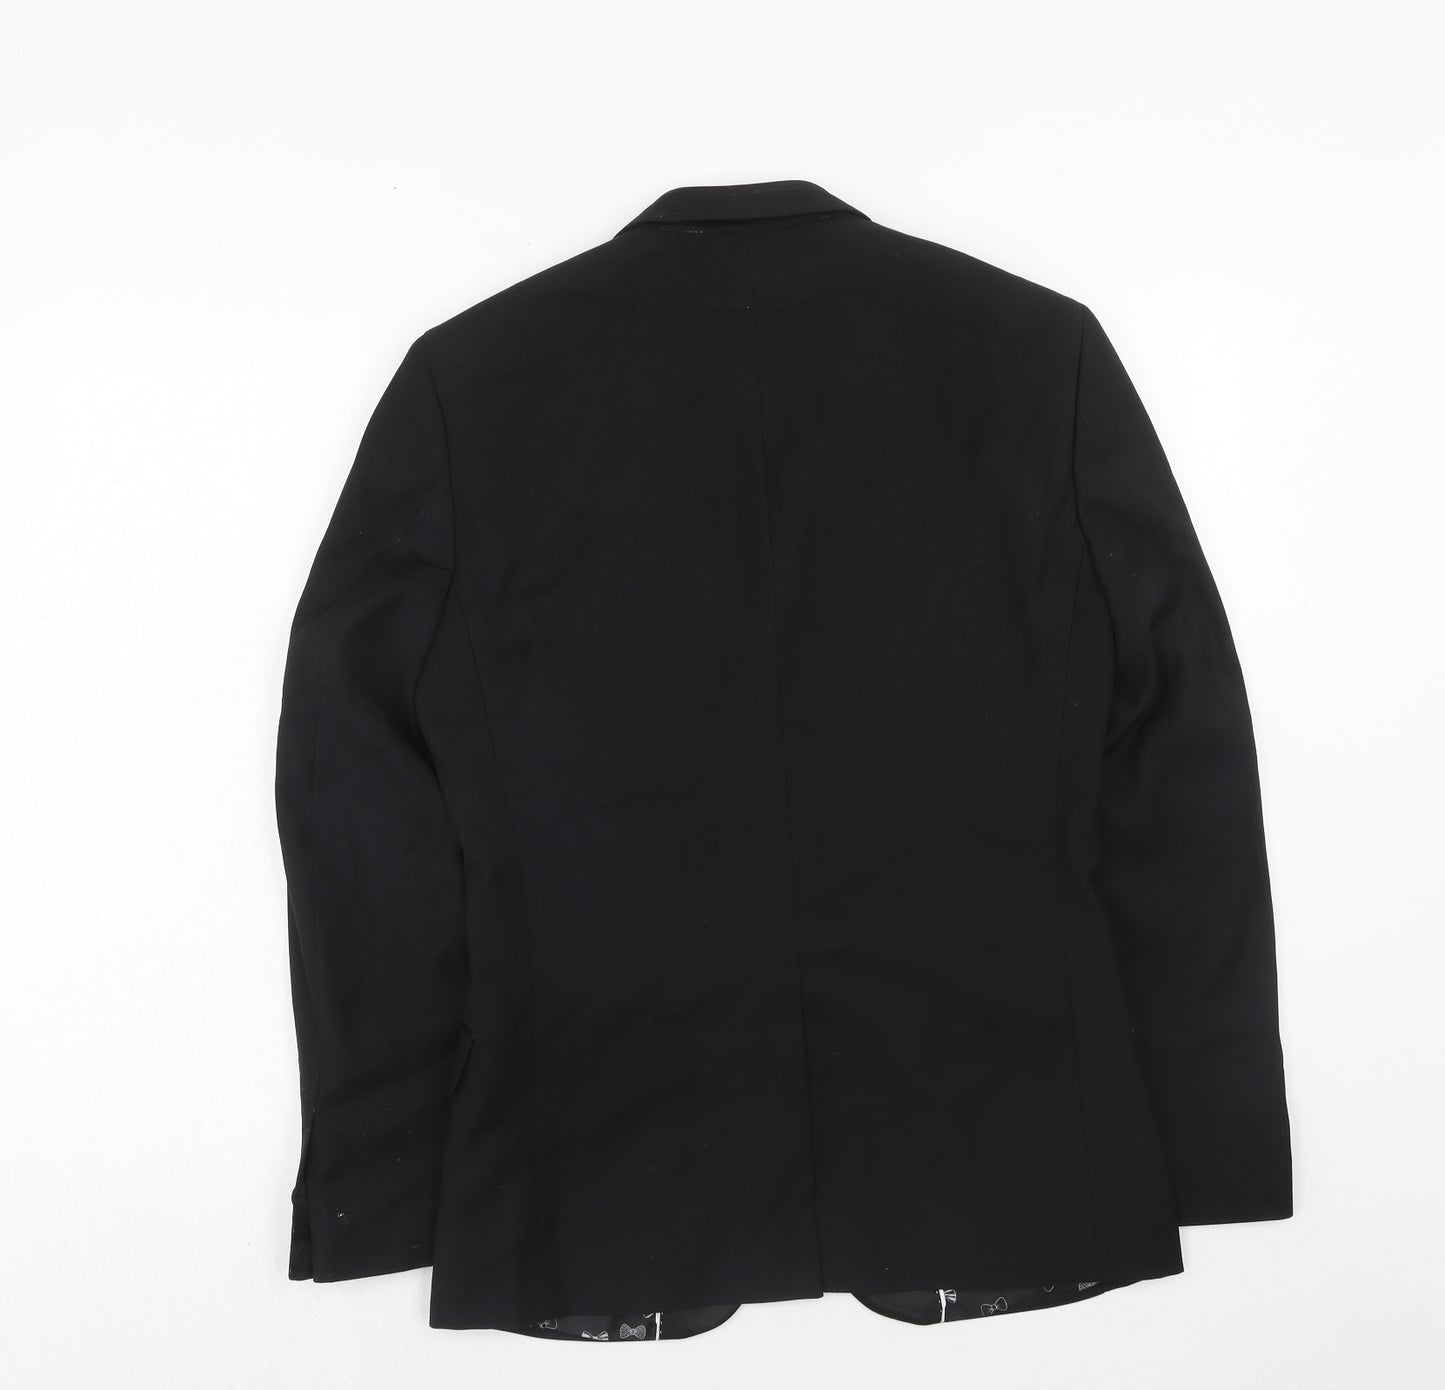 Harry Brown Mens Black Polyester Tuxedo Suit Jacket Size 36 Regular